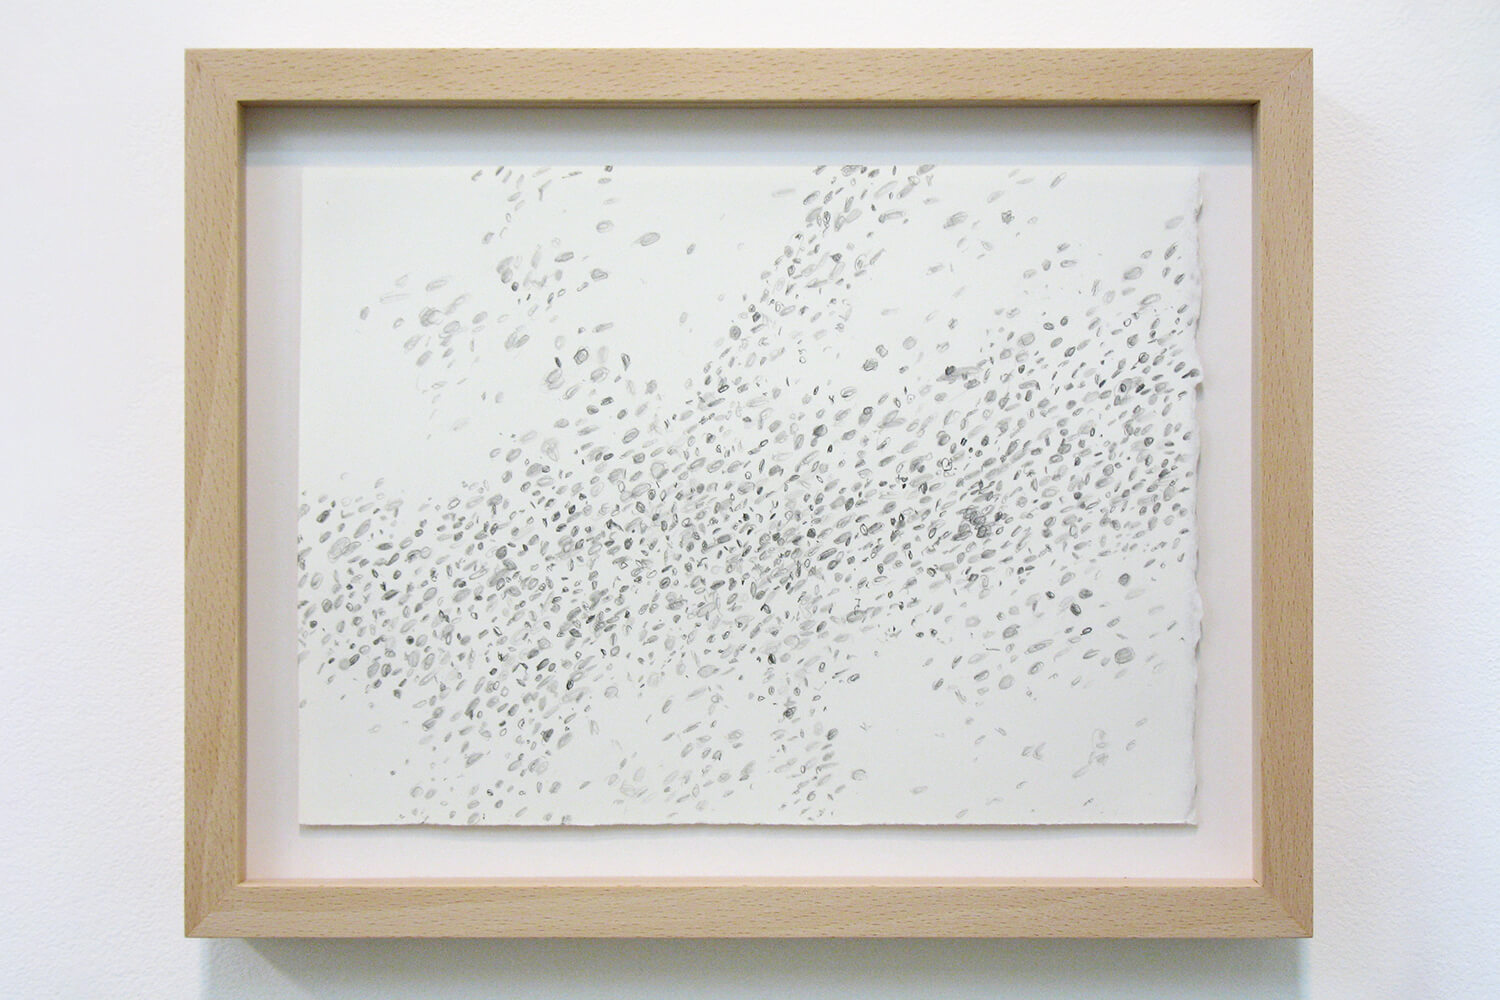 When the Dust Settles (d7)<br>Pencil on paper, 18.9 x 26 cm, 2010